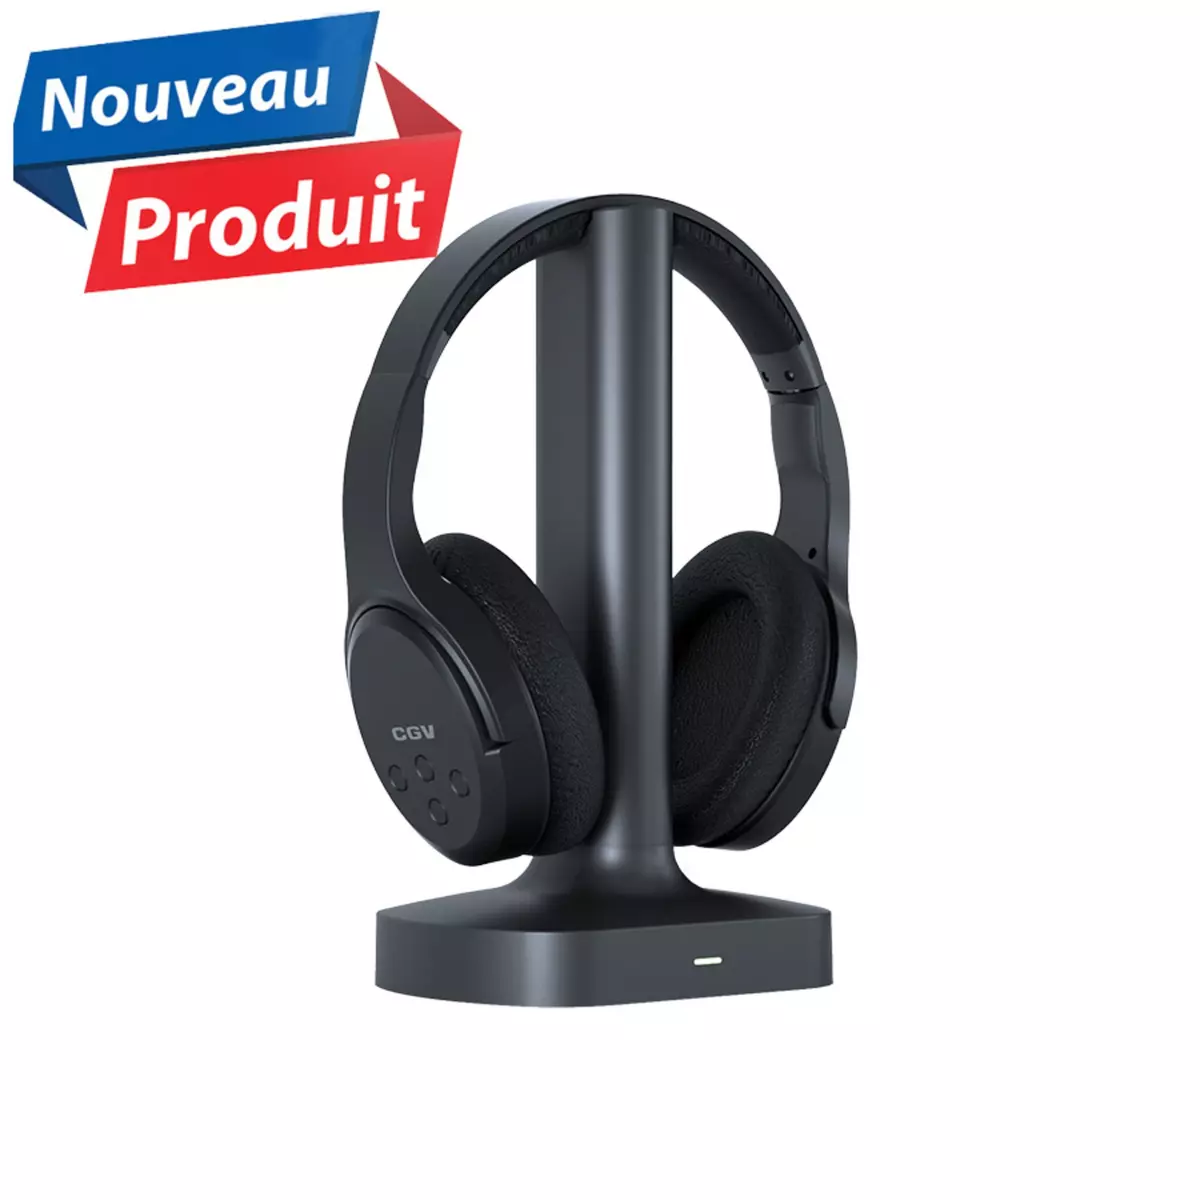 CGV HEL Prélude Premium - Noir